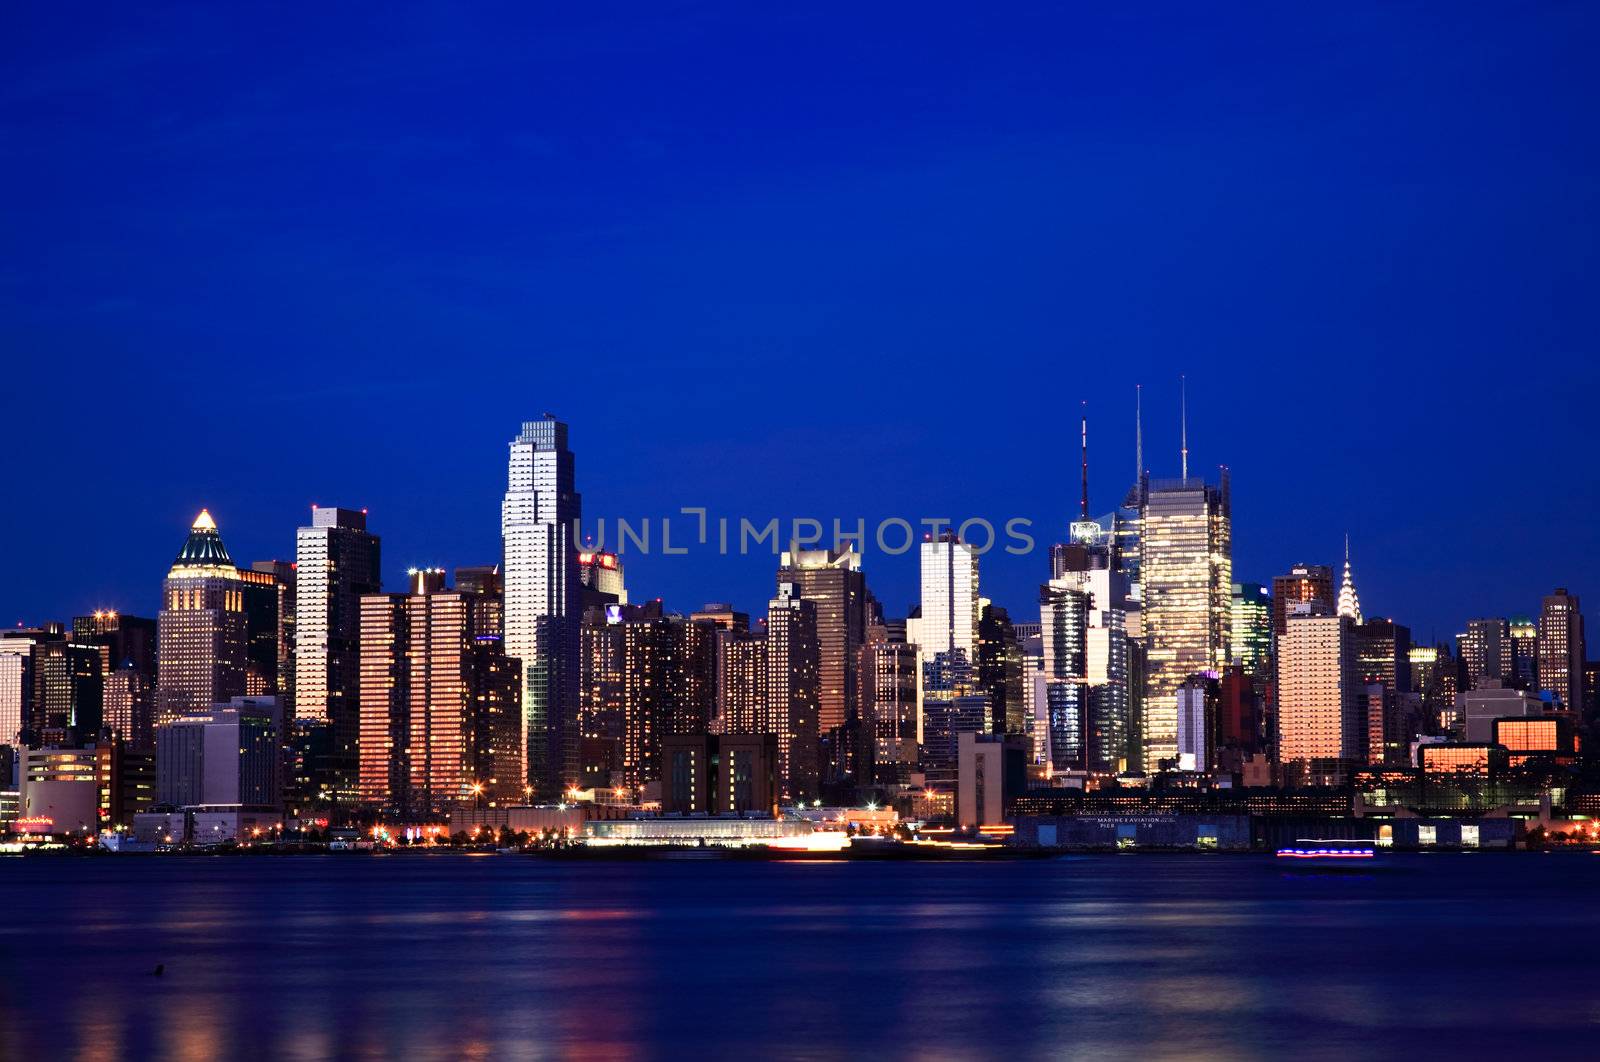 The Mid-town Manhattan Skyline by gary718